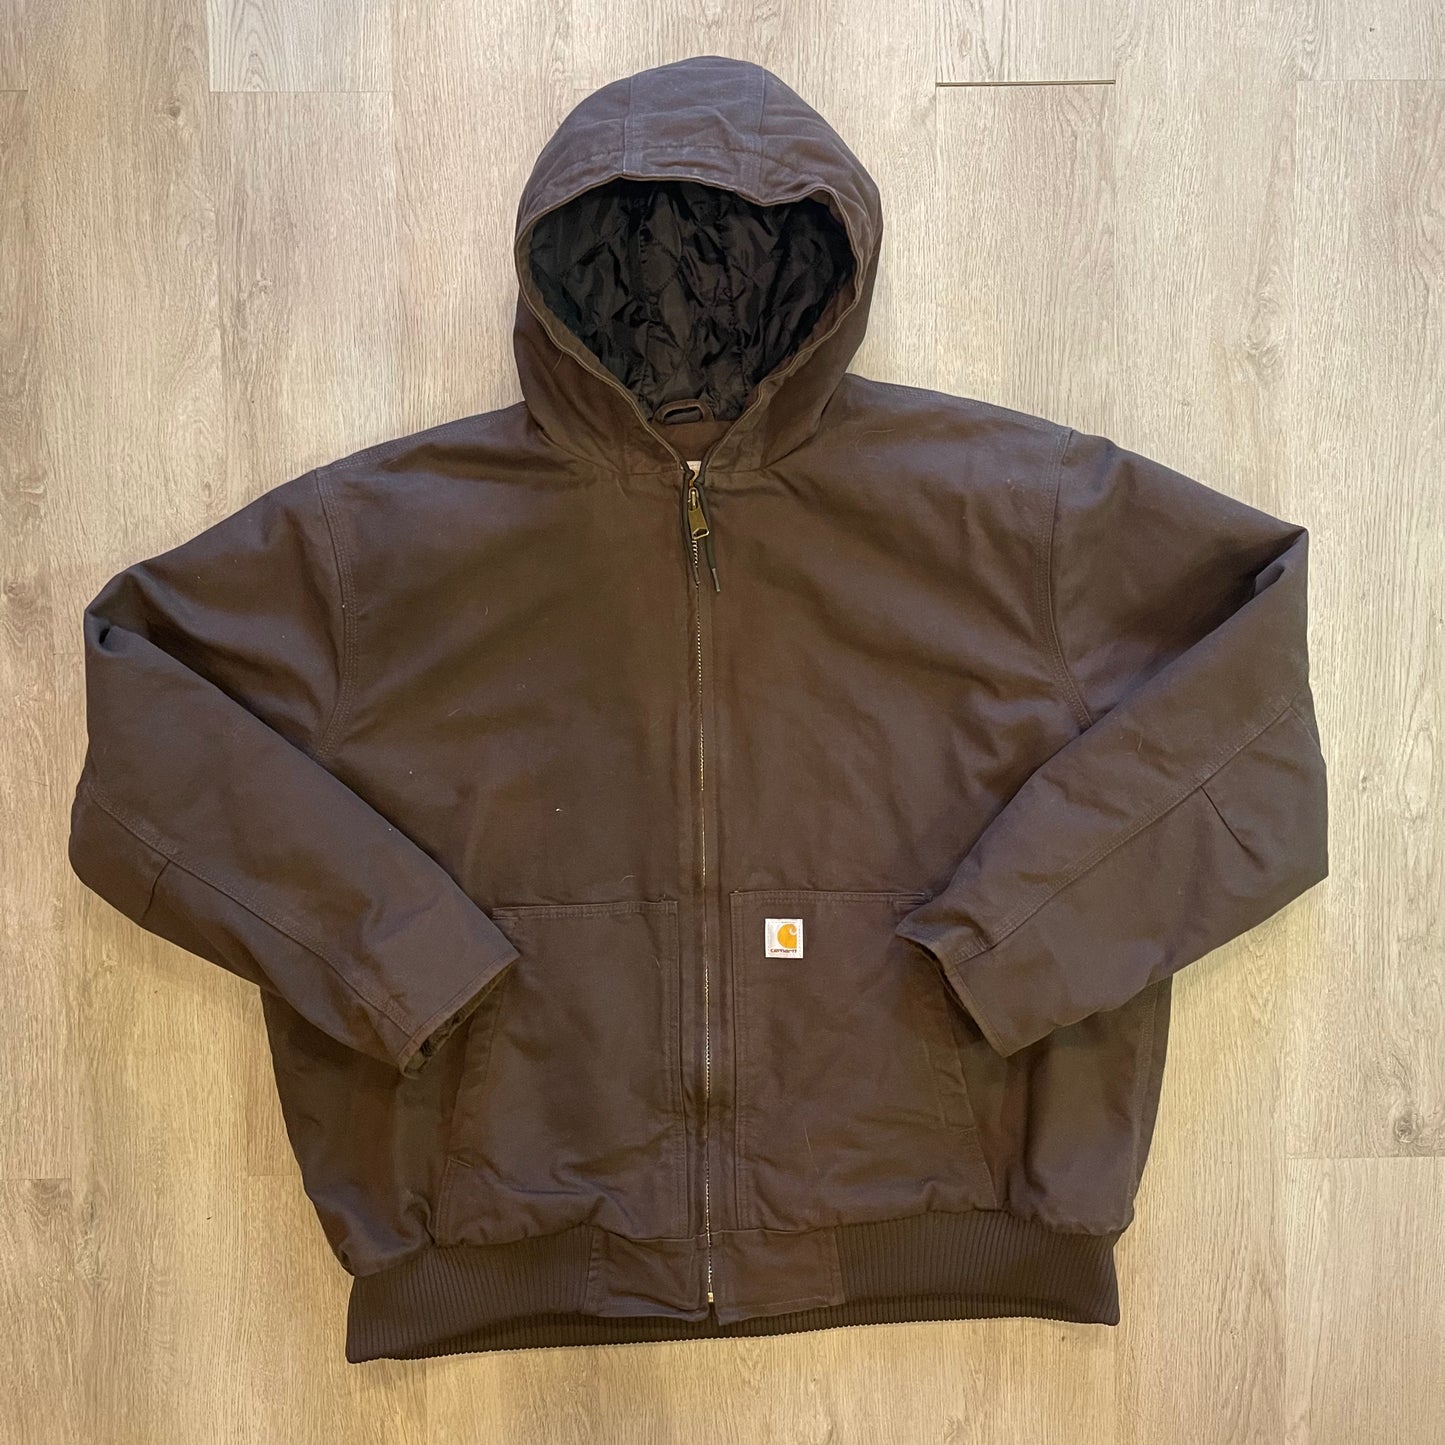 Vintage Dark mocha brown jacket